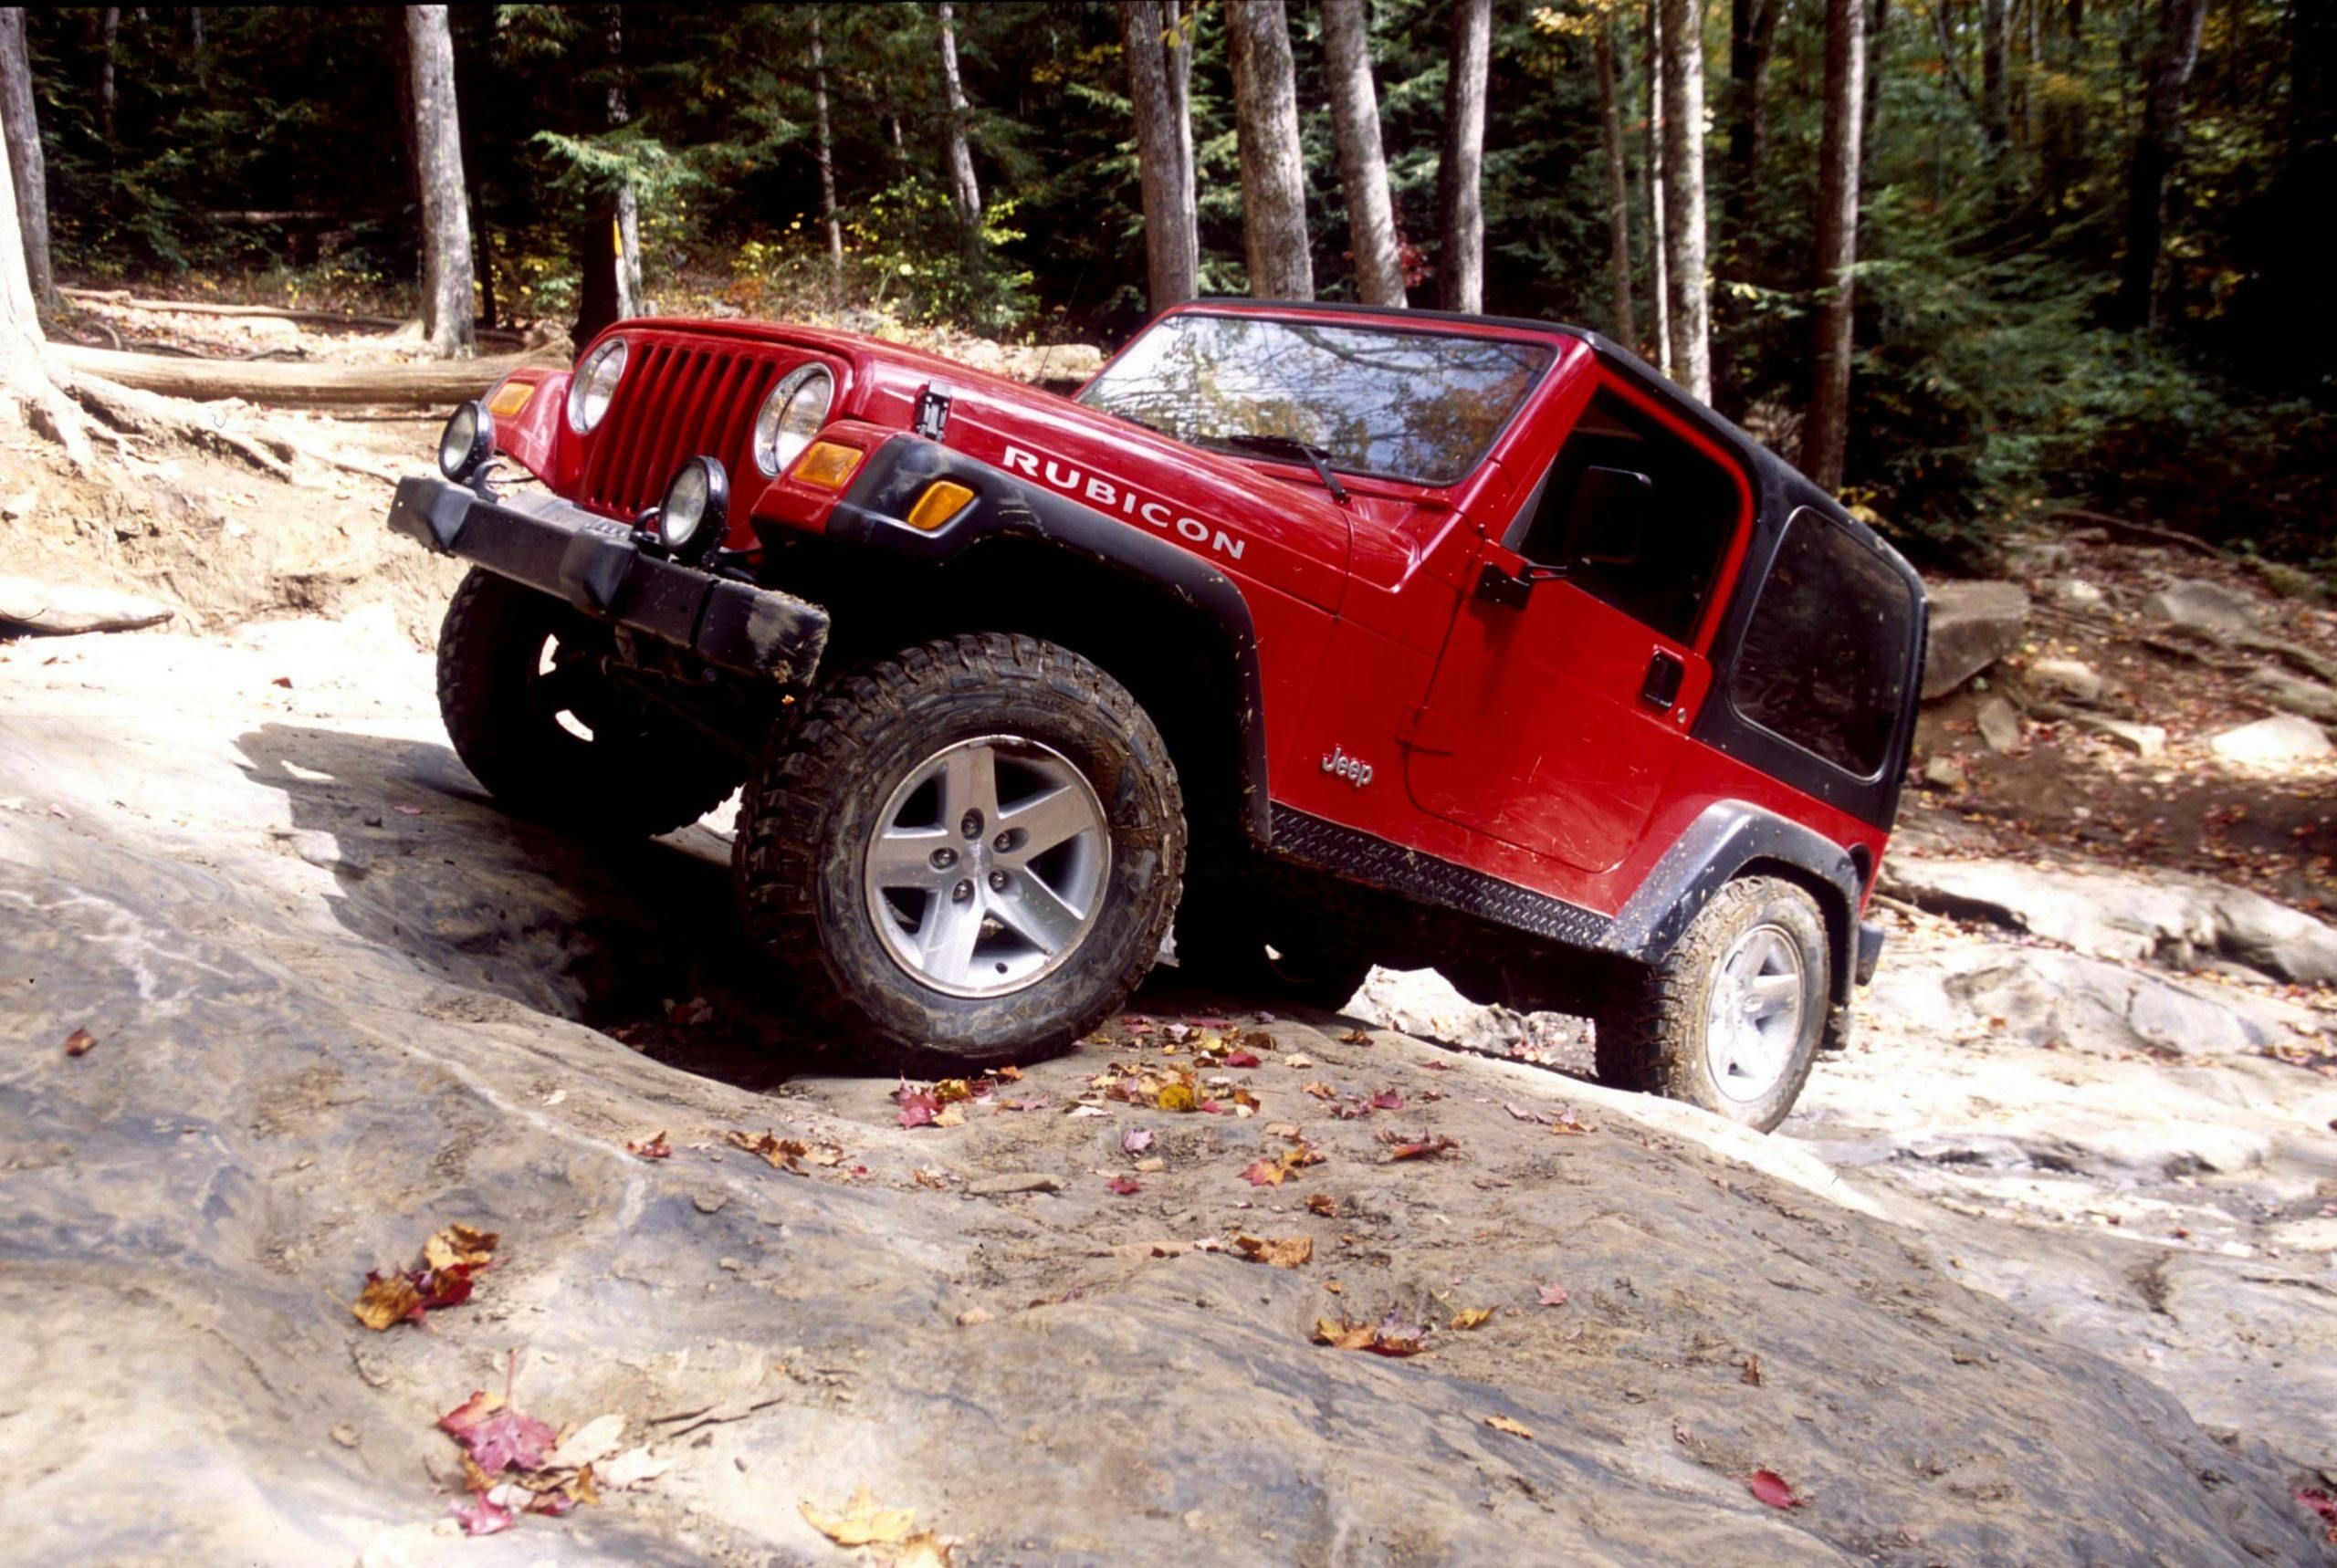 2003 Jeep Wrangler Rubicon original first